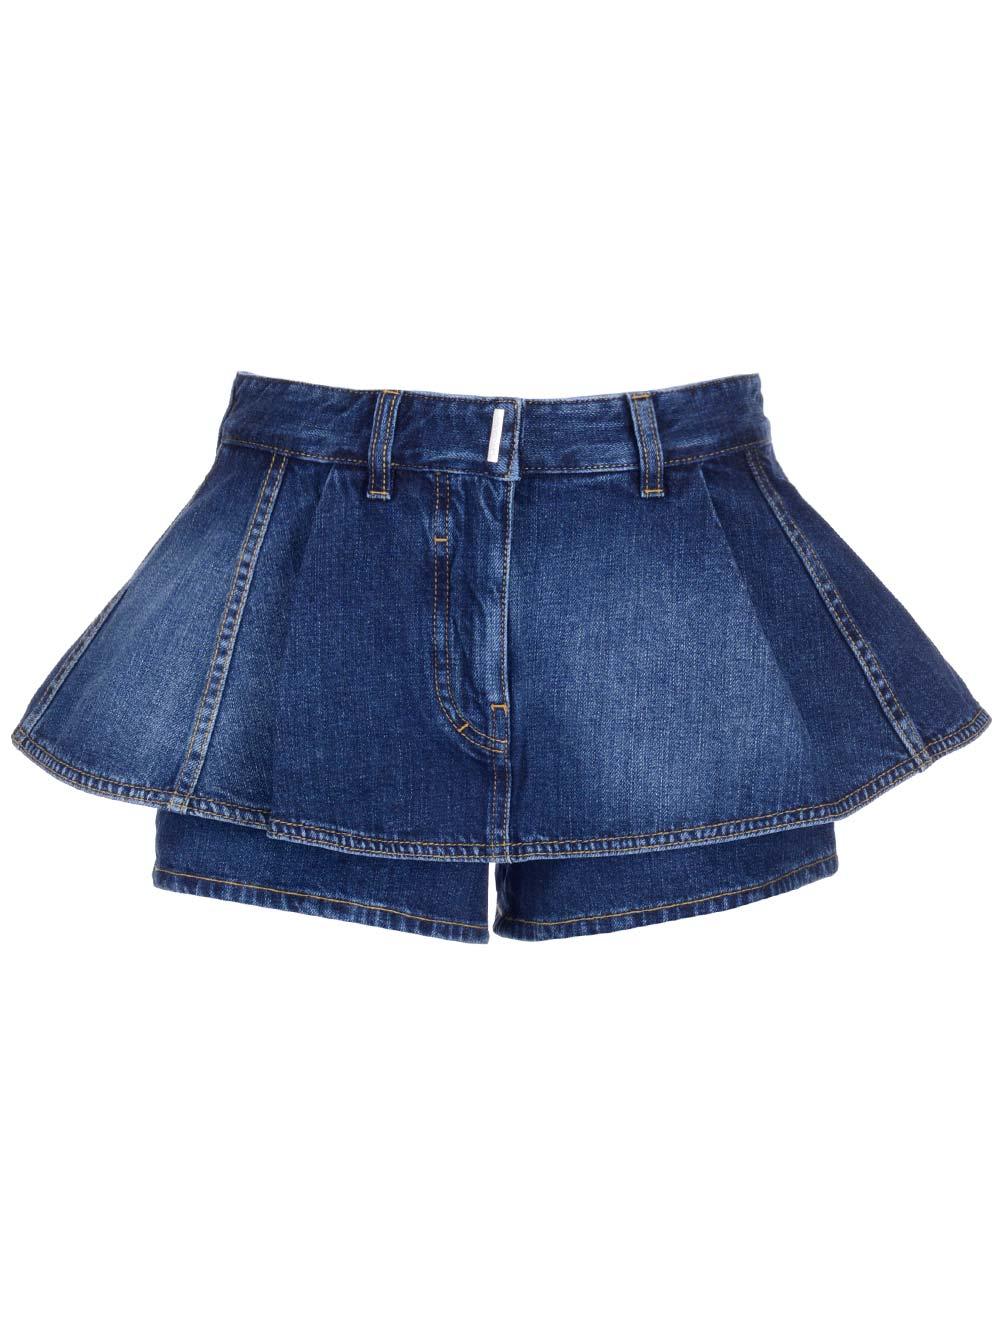 Givenchy Ruffled Denim Shorts